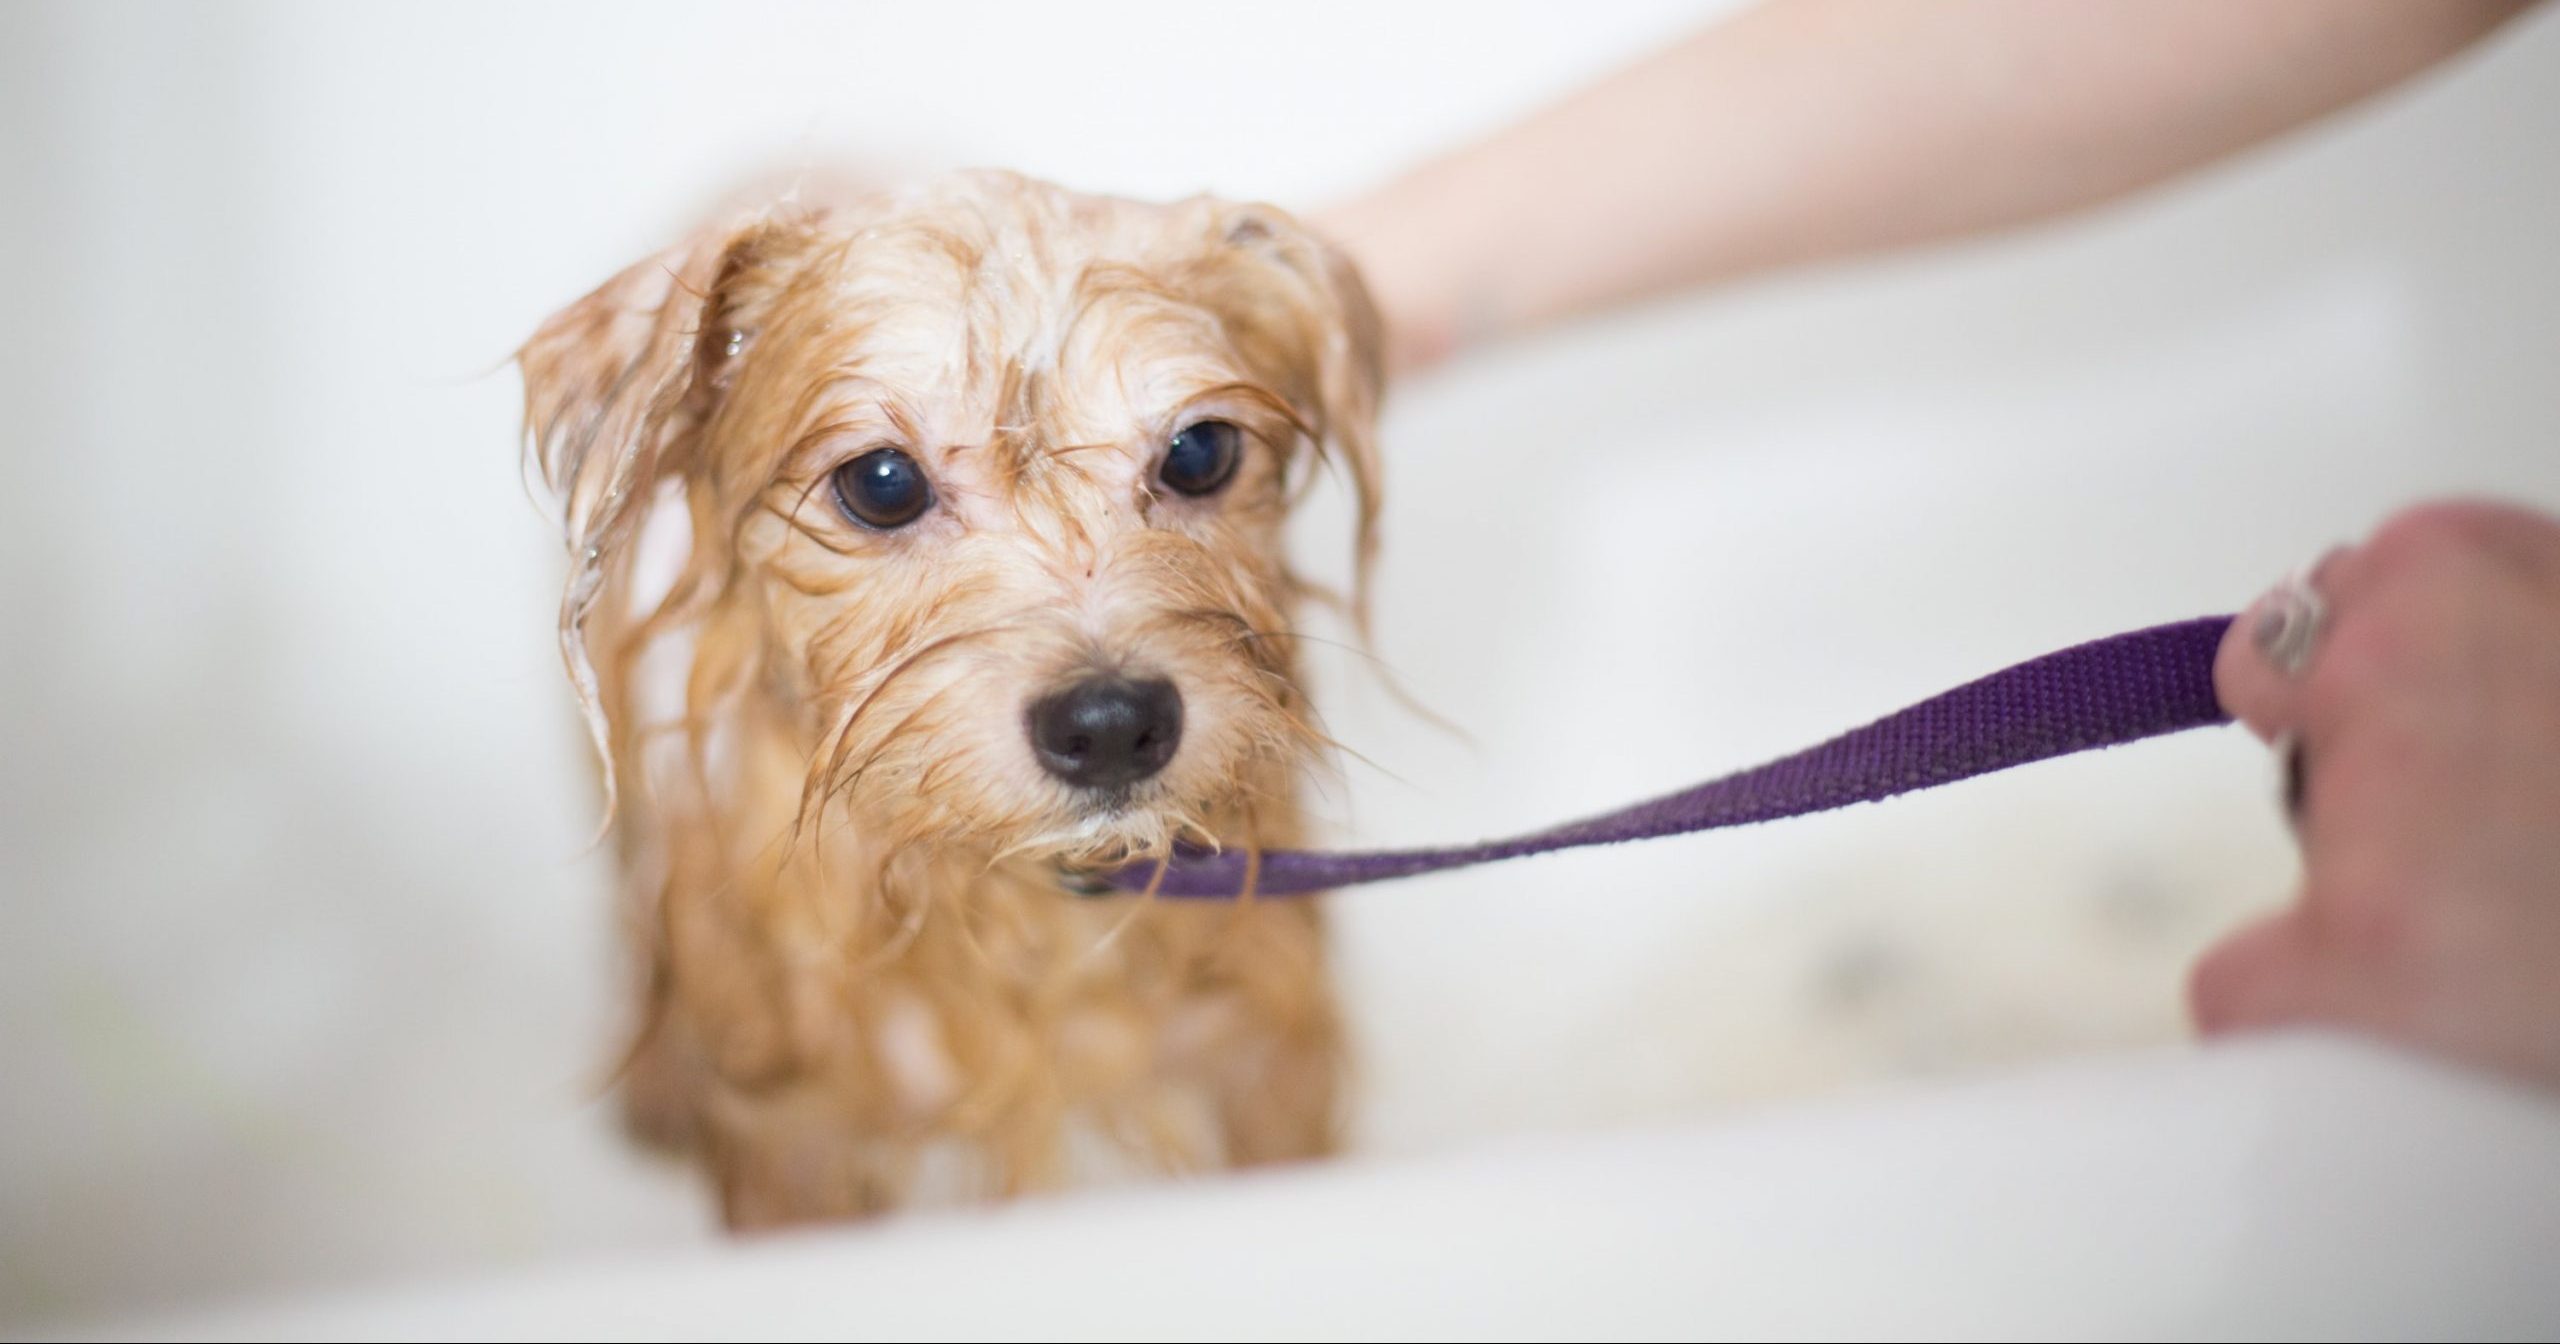 Dog Having A Bath at A Groomers